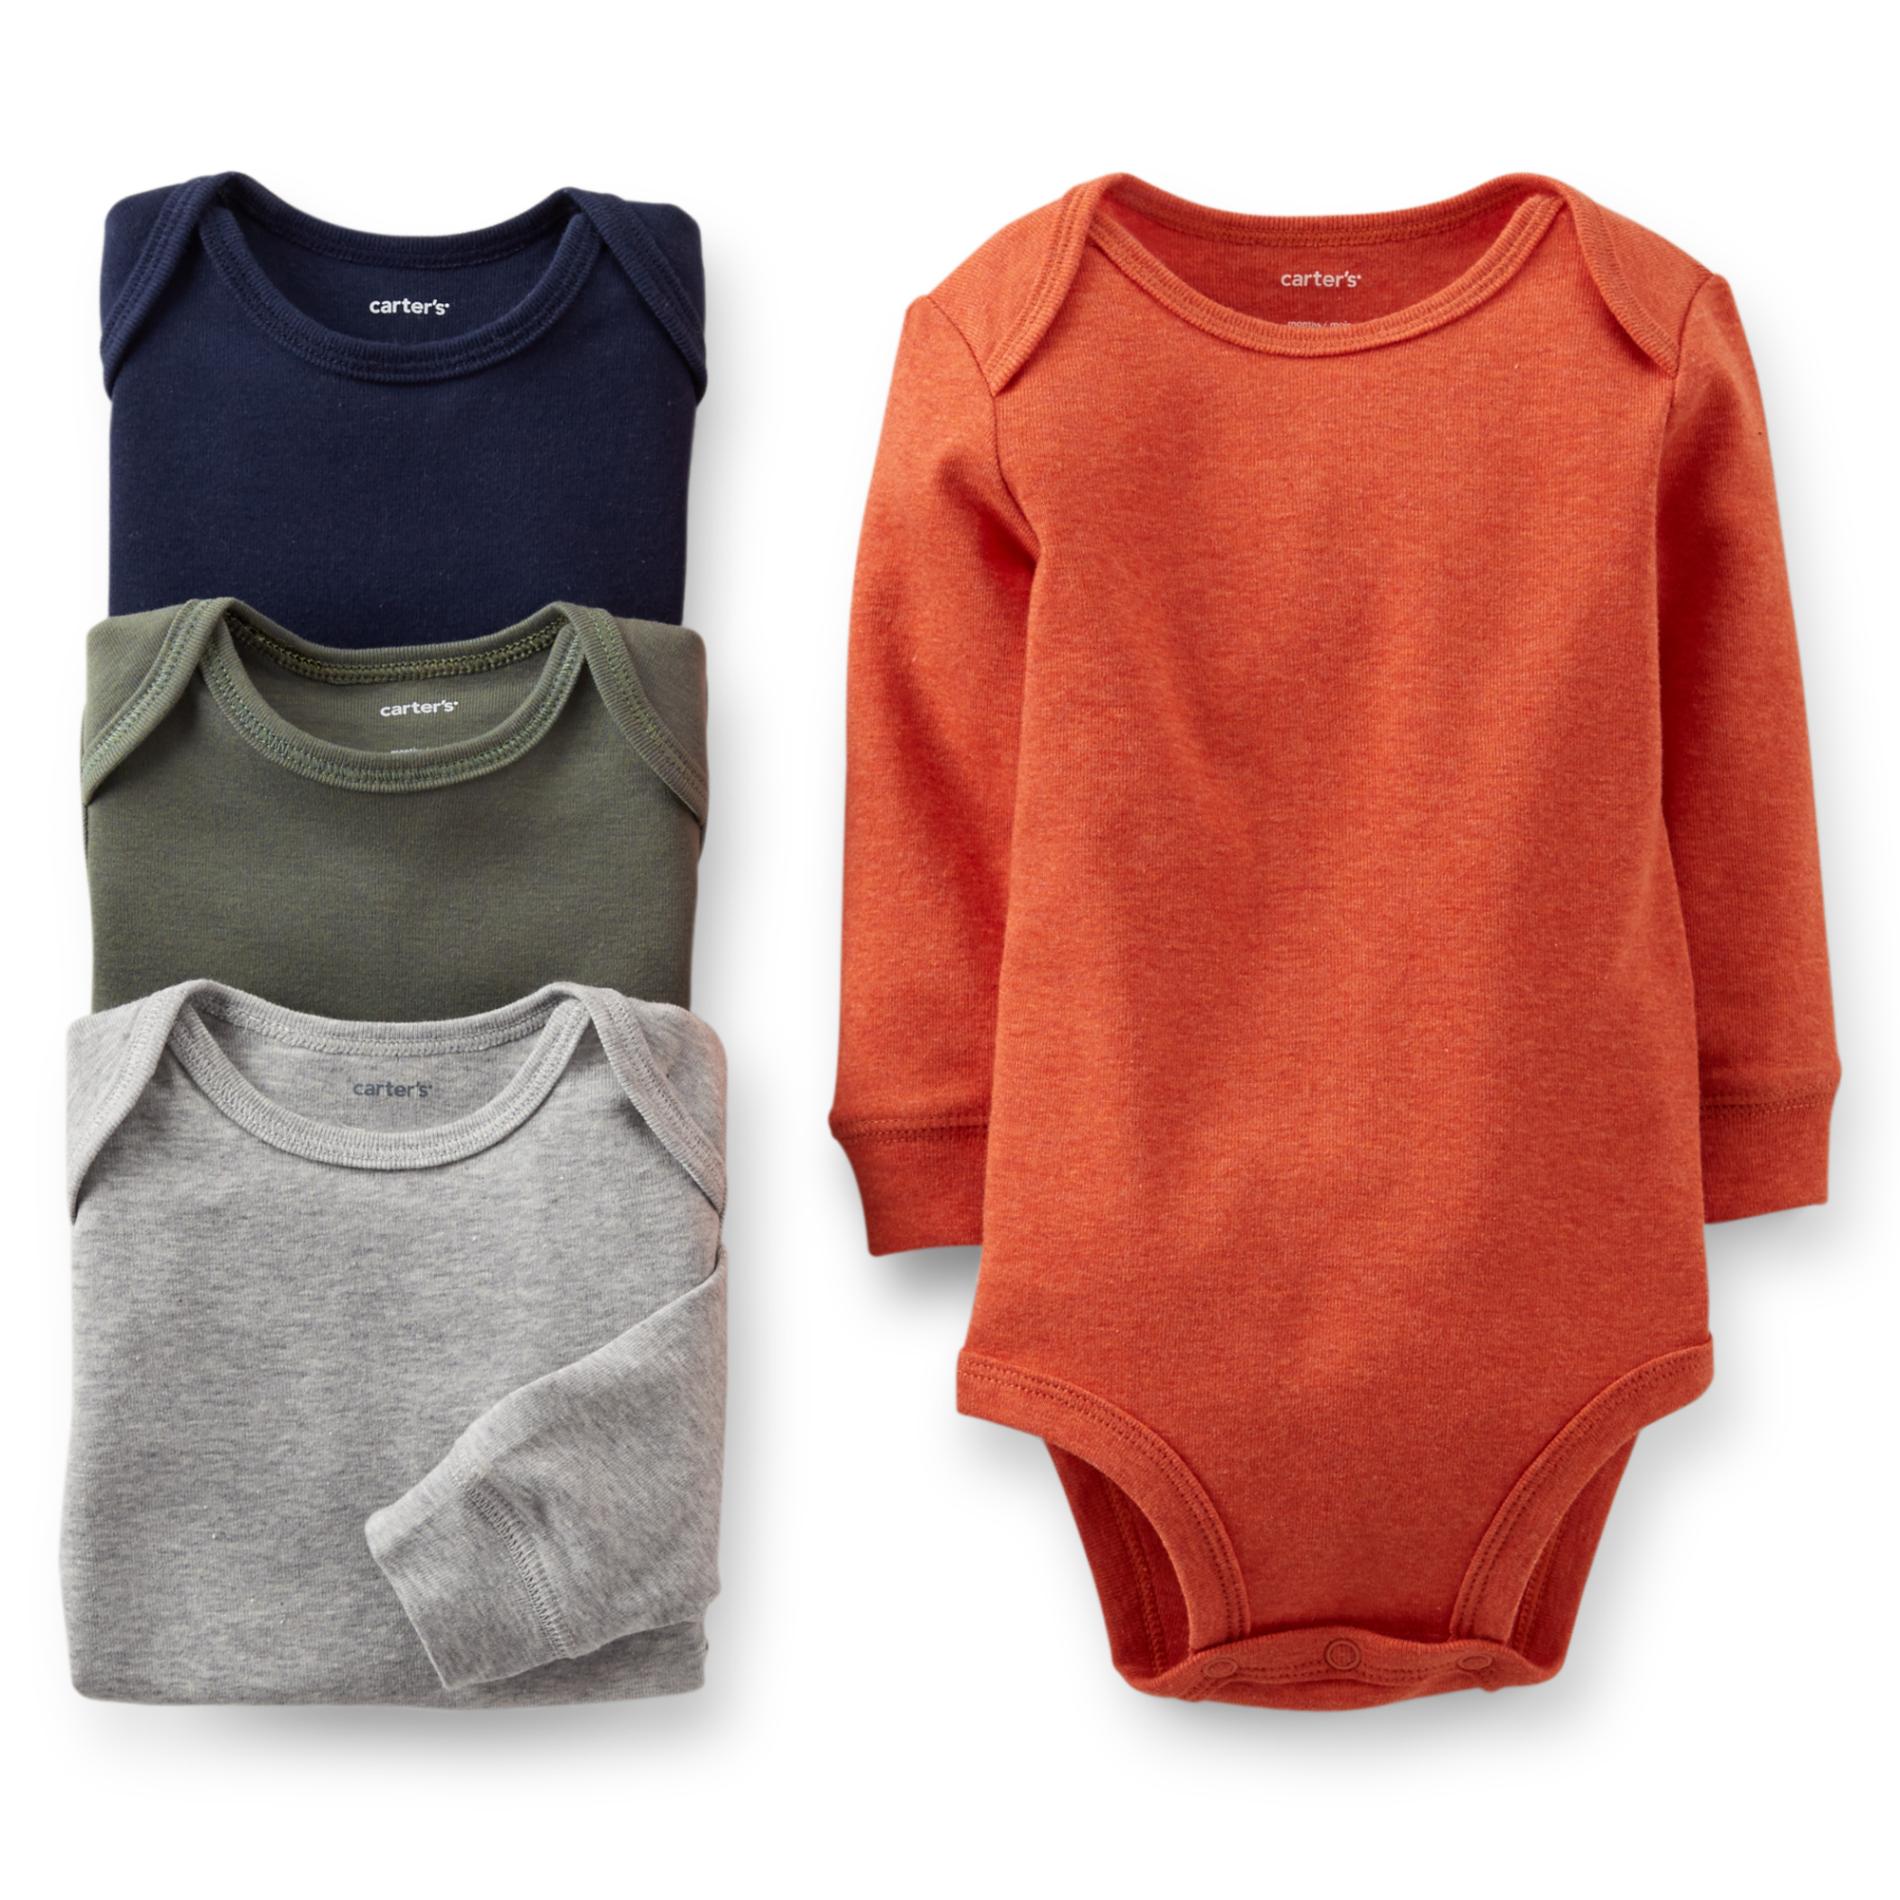 Carter's Newborn & Infant Boy's 4-Pack Long-Sleeve Bodysuits